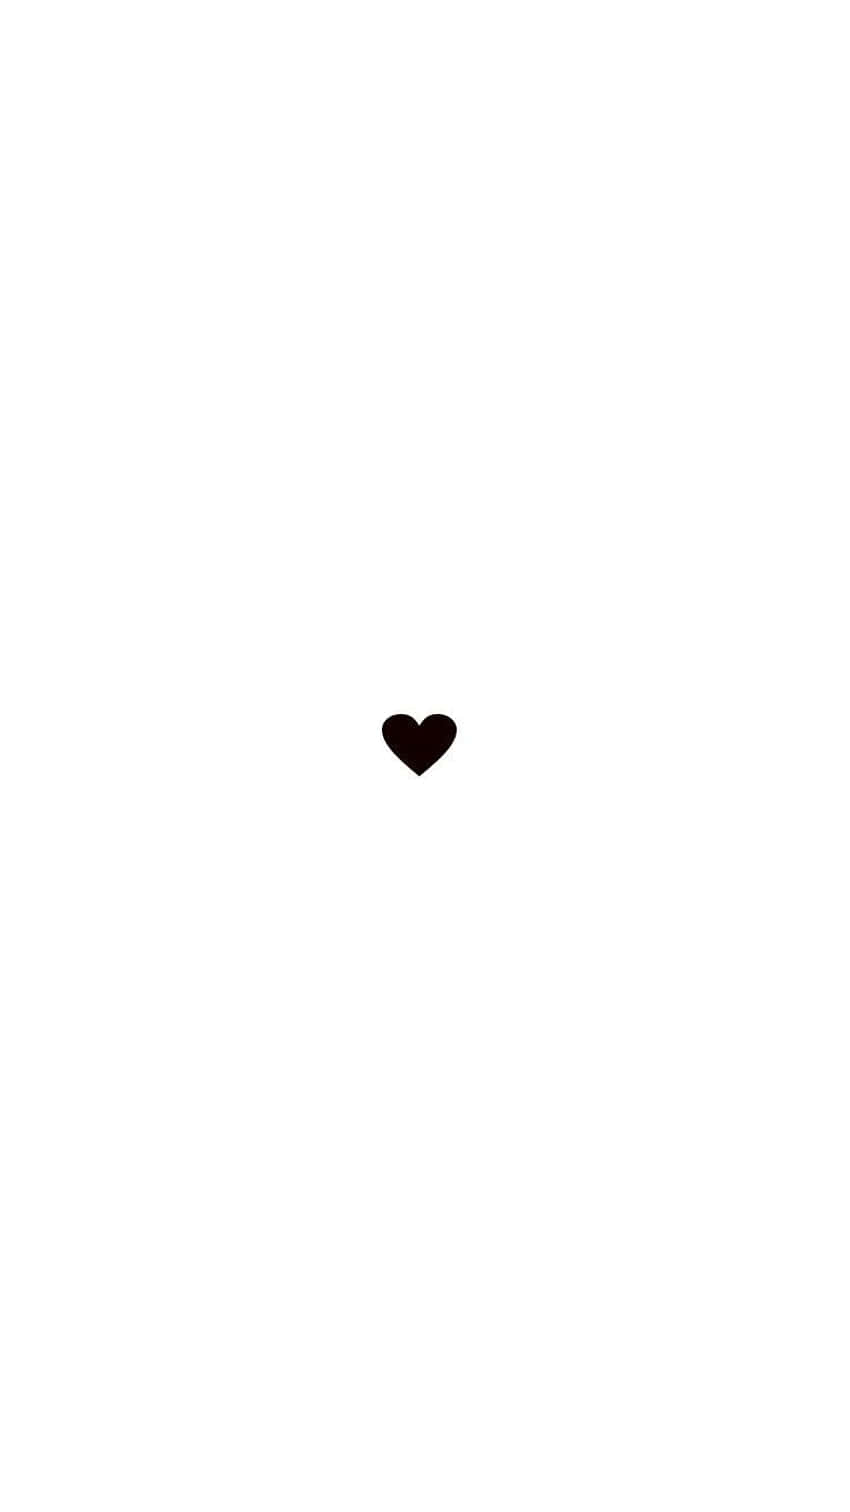 Monochrome Love - A Beautiful Black and White Heart